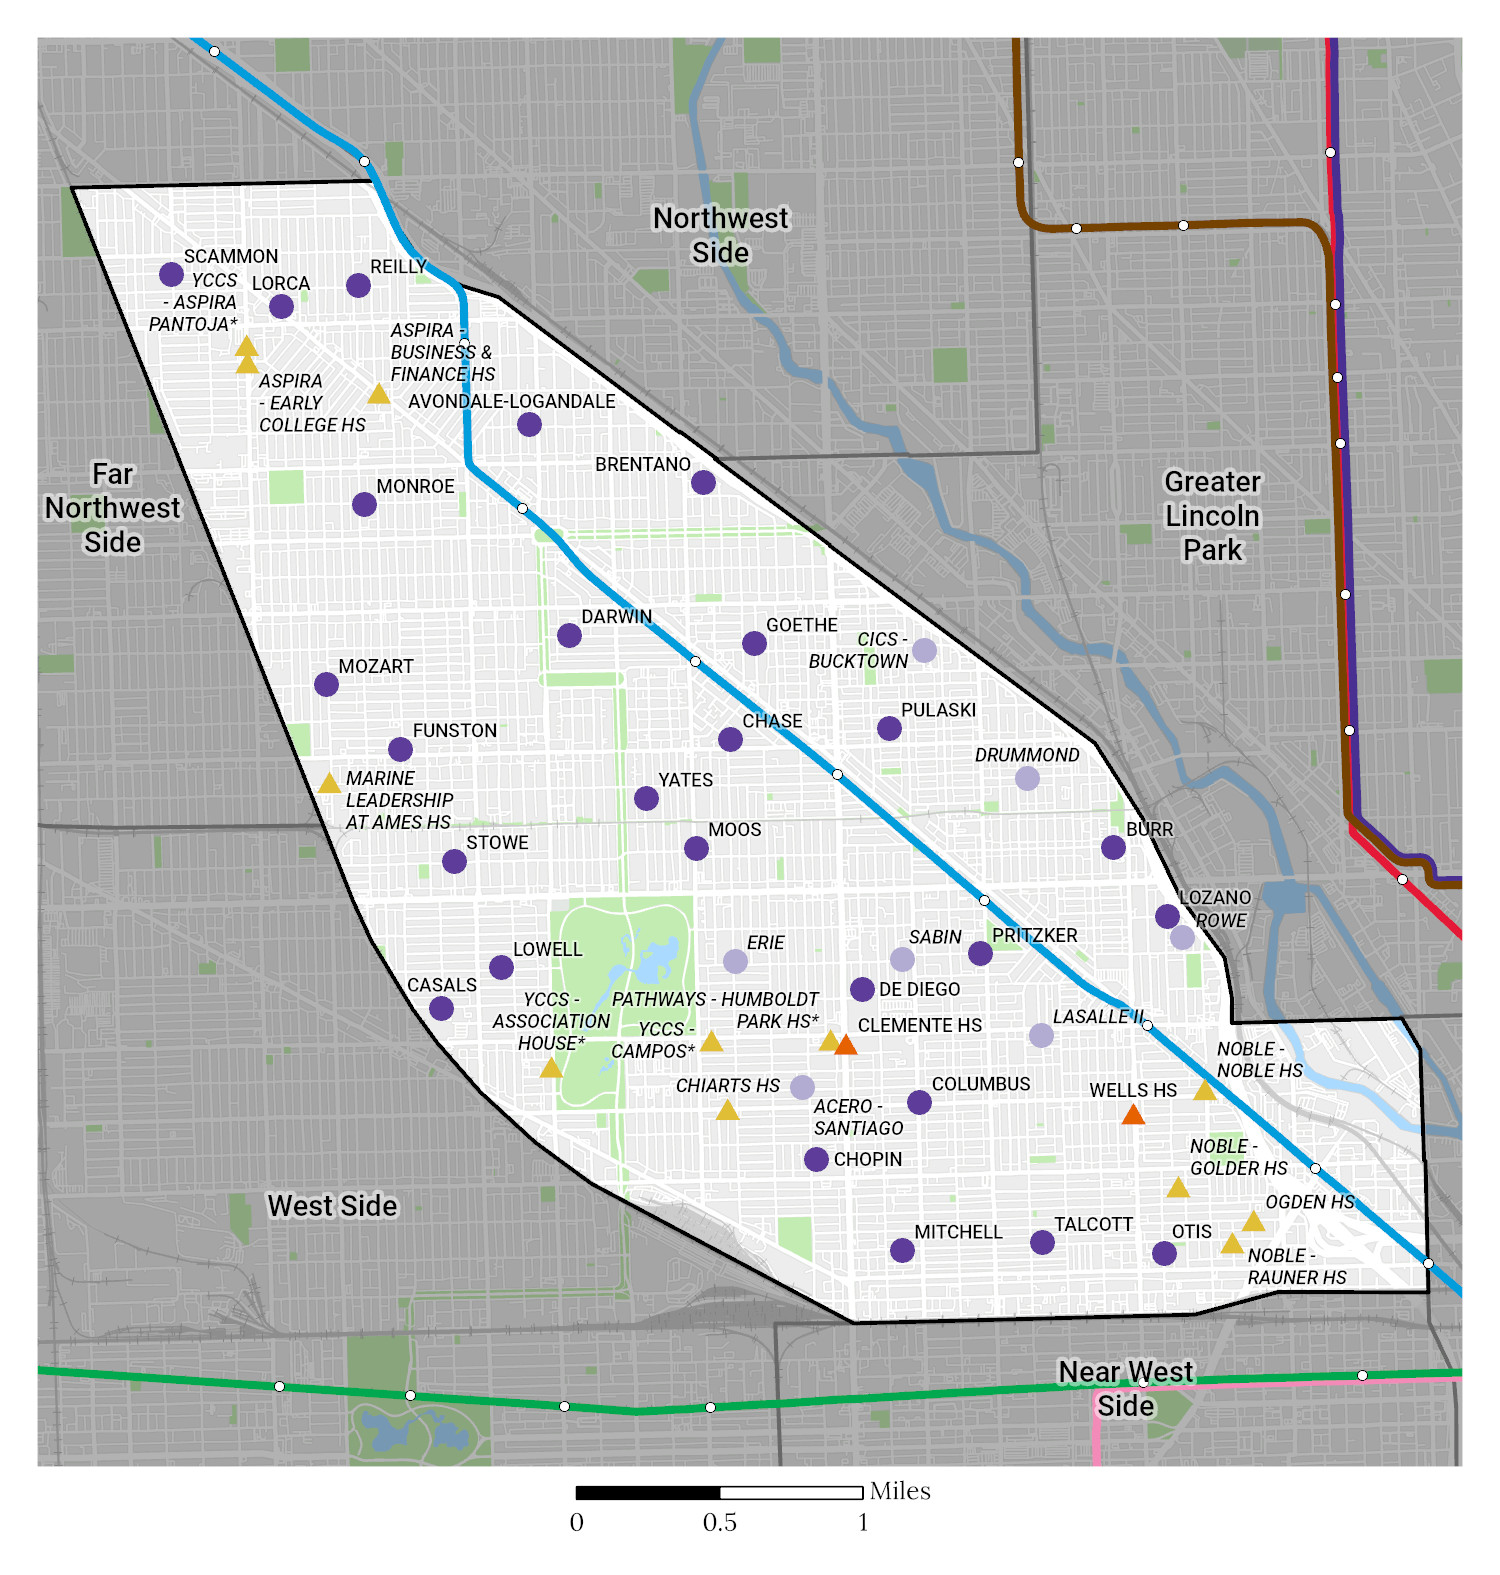 Region Map of Greater Milwaukee Avenue